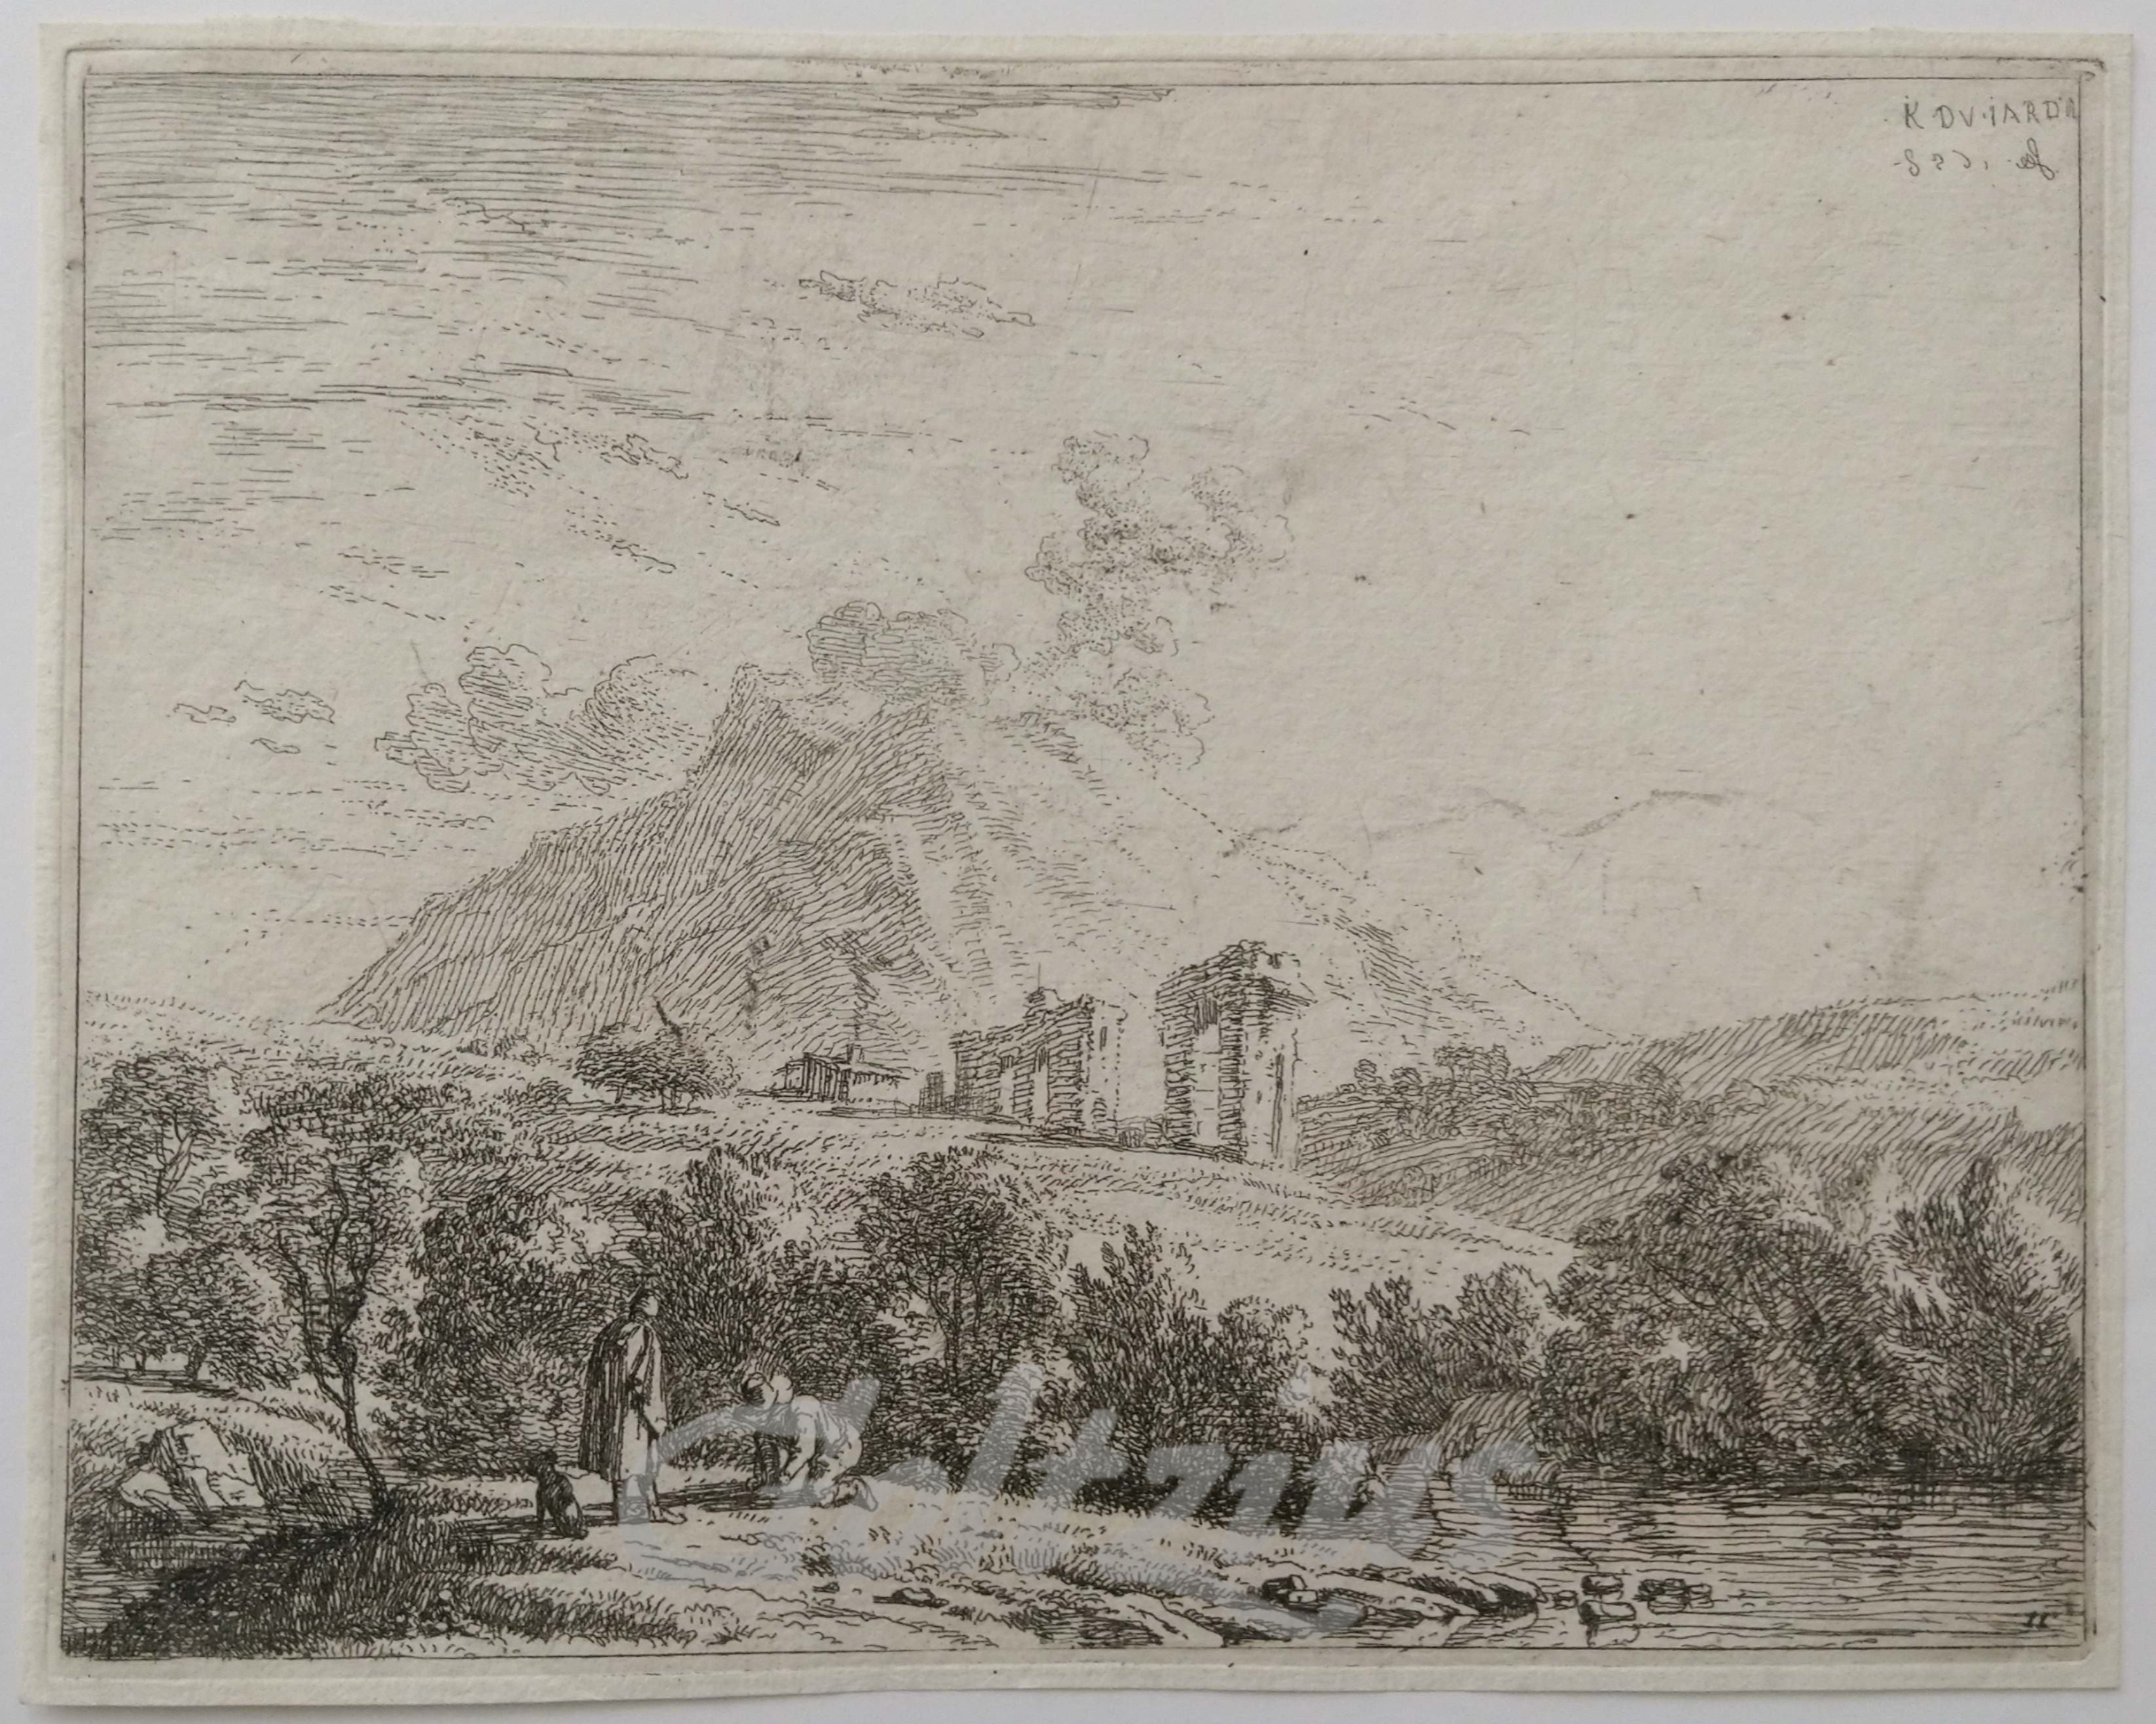 JARDIN, KAREL DU, Landscape with ruin and two men with a dog